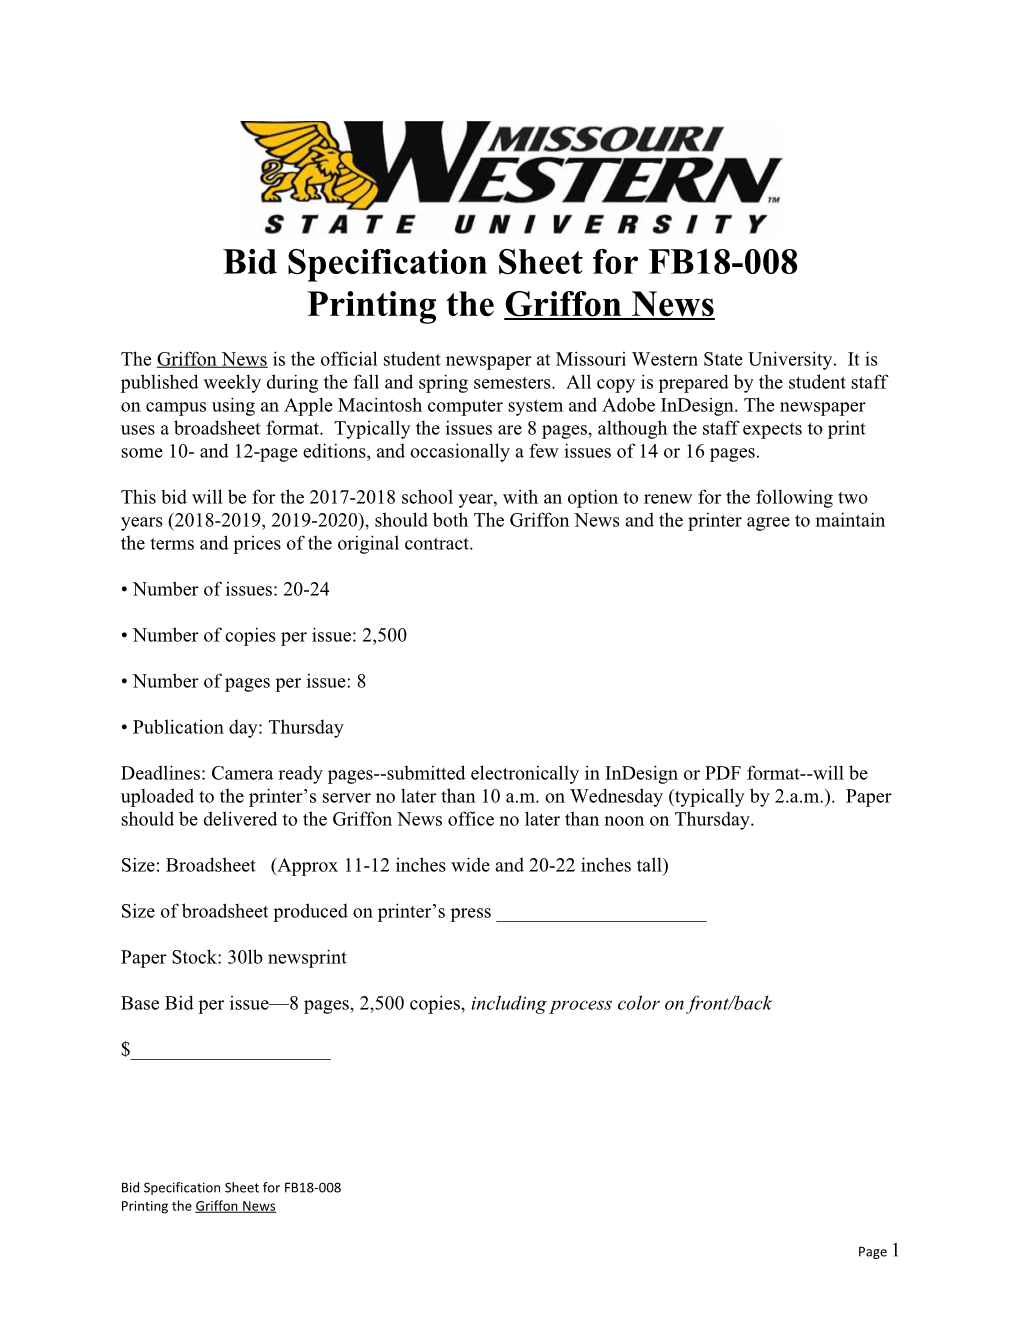 Bid Sheet for Printting the Griffon News